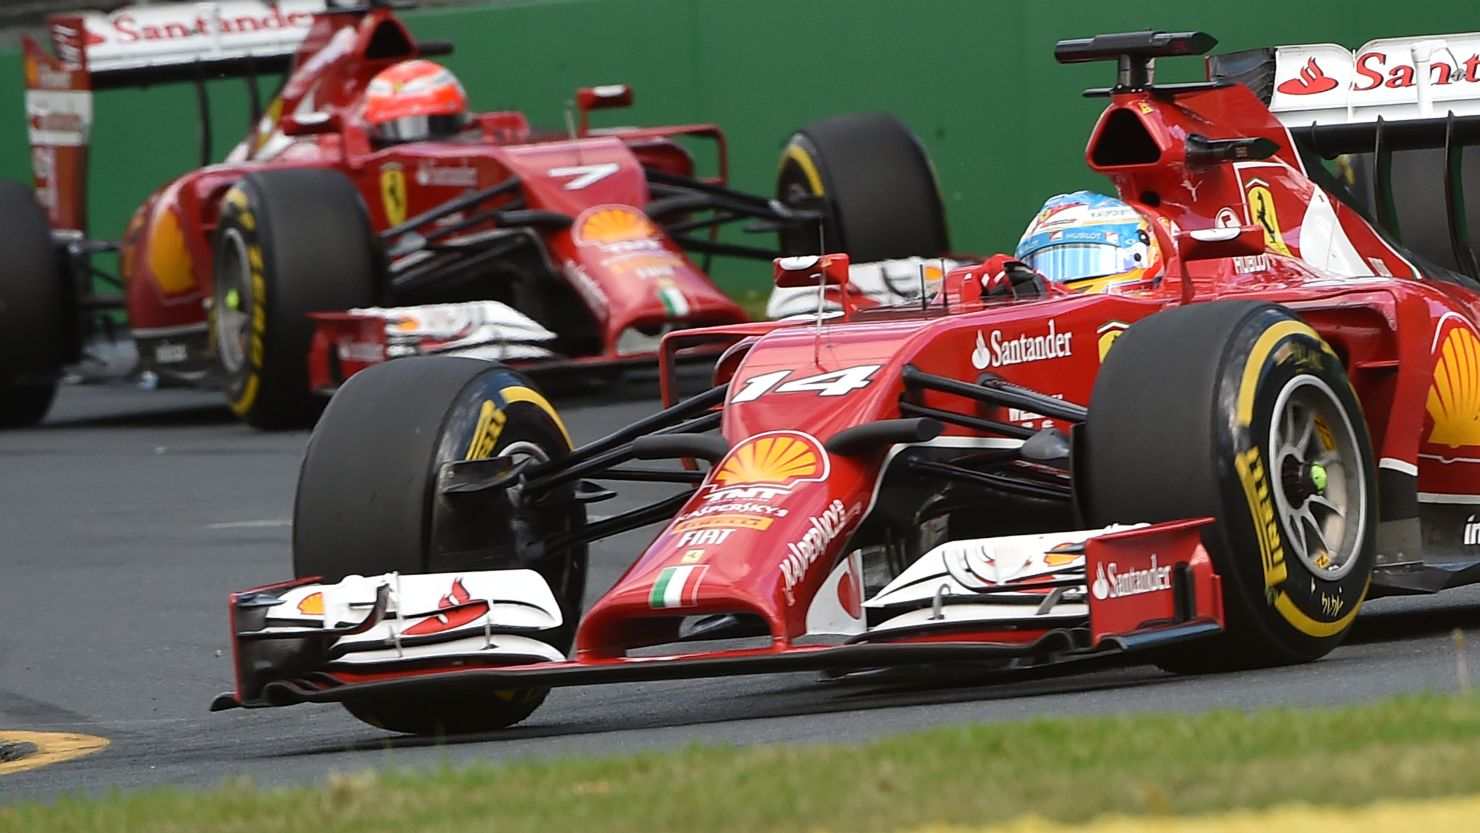 Ferrari's Fernando Alonso and Kimi Raikkonen finished fourth and seventh respectively at the Australian Grand Prix.